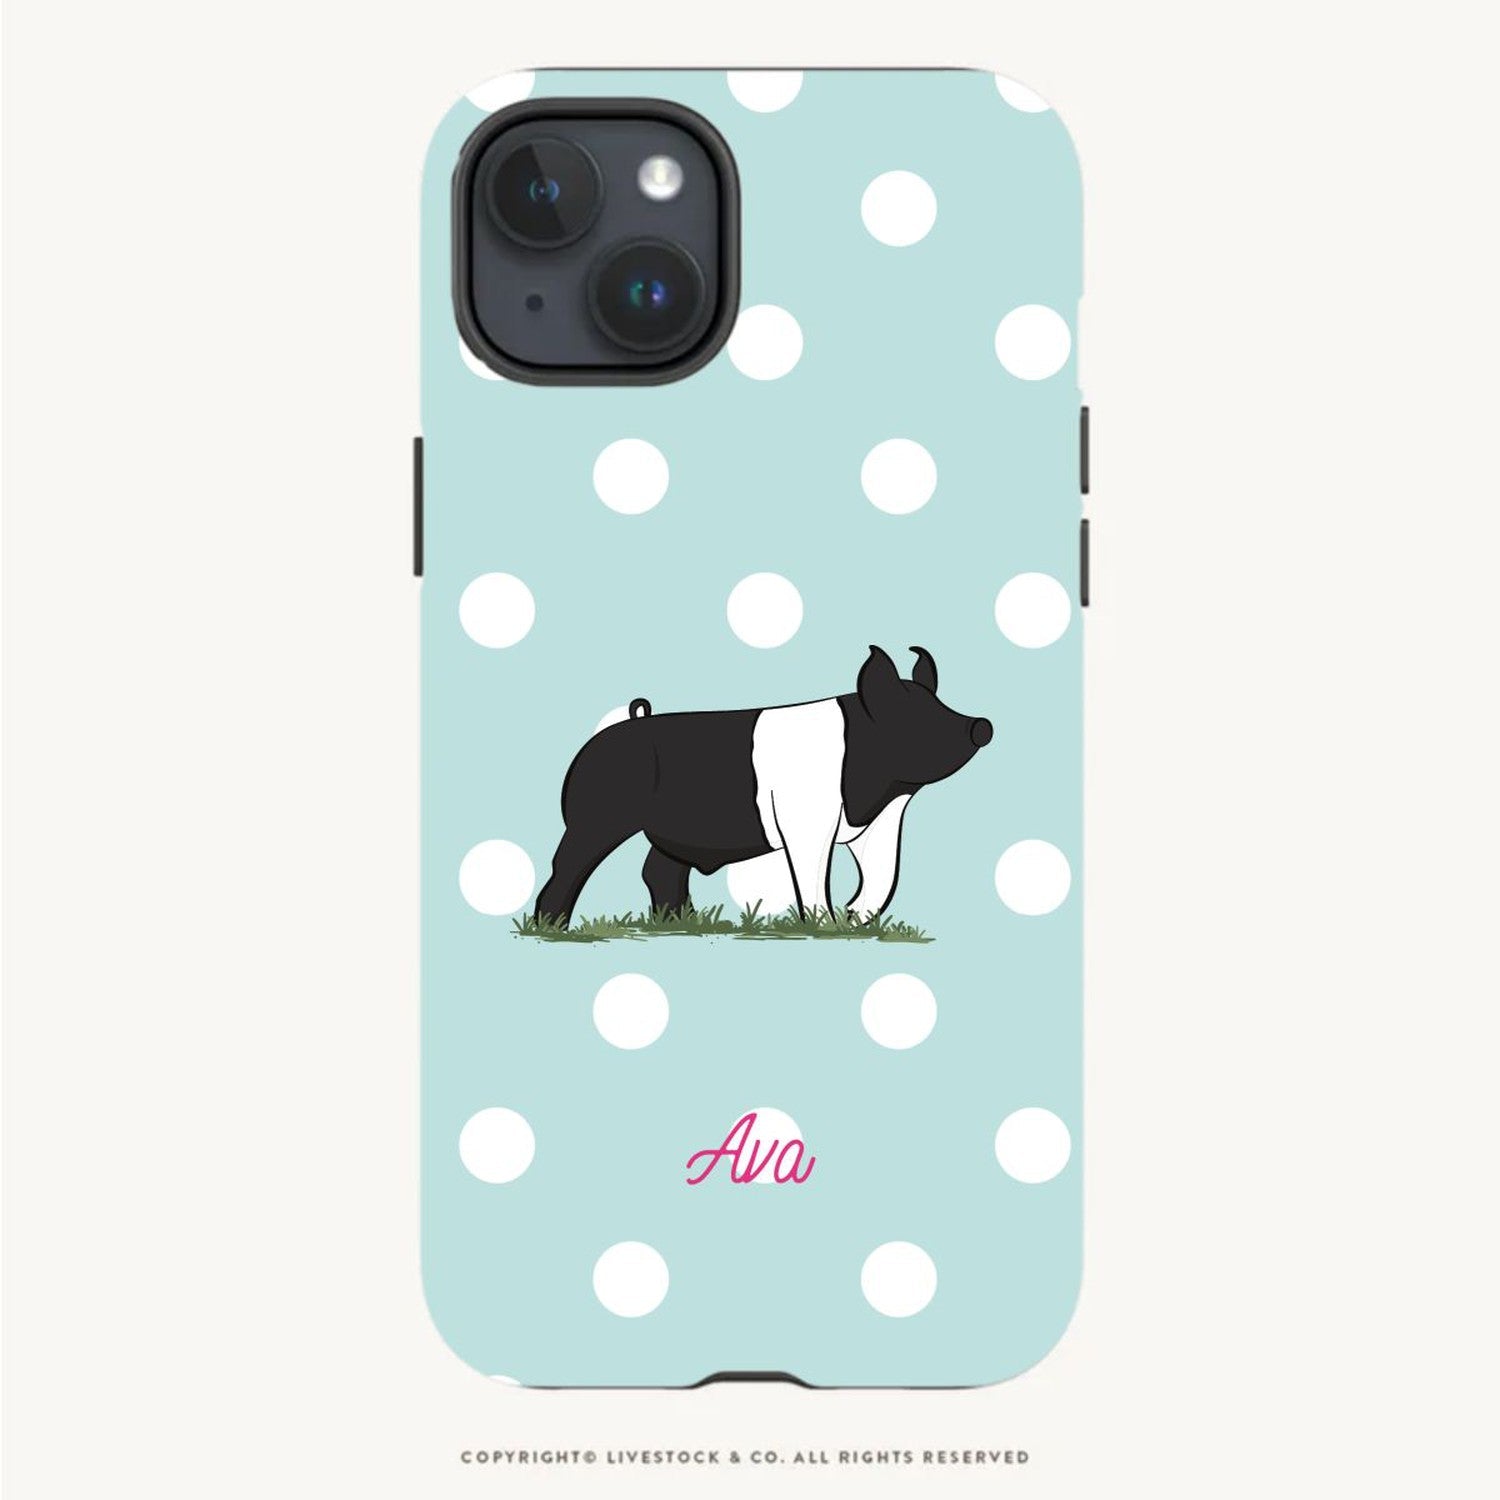 Custom Made iPhone Case - Signature Patterns Stock Show Livestock - Livestock &amp; Co. Boutique